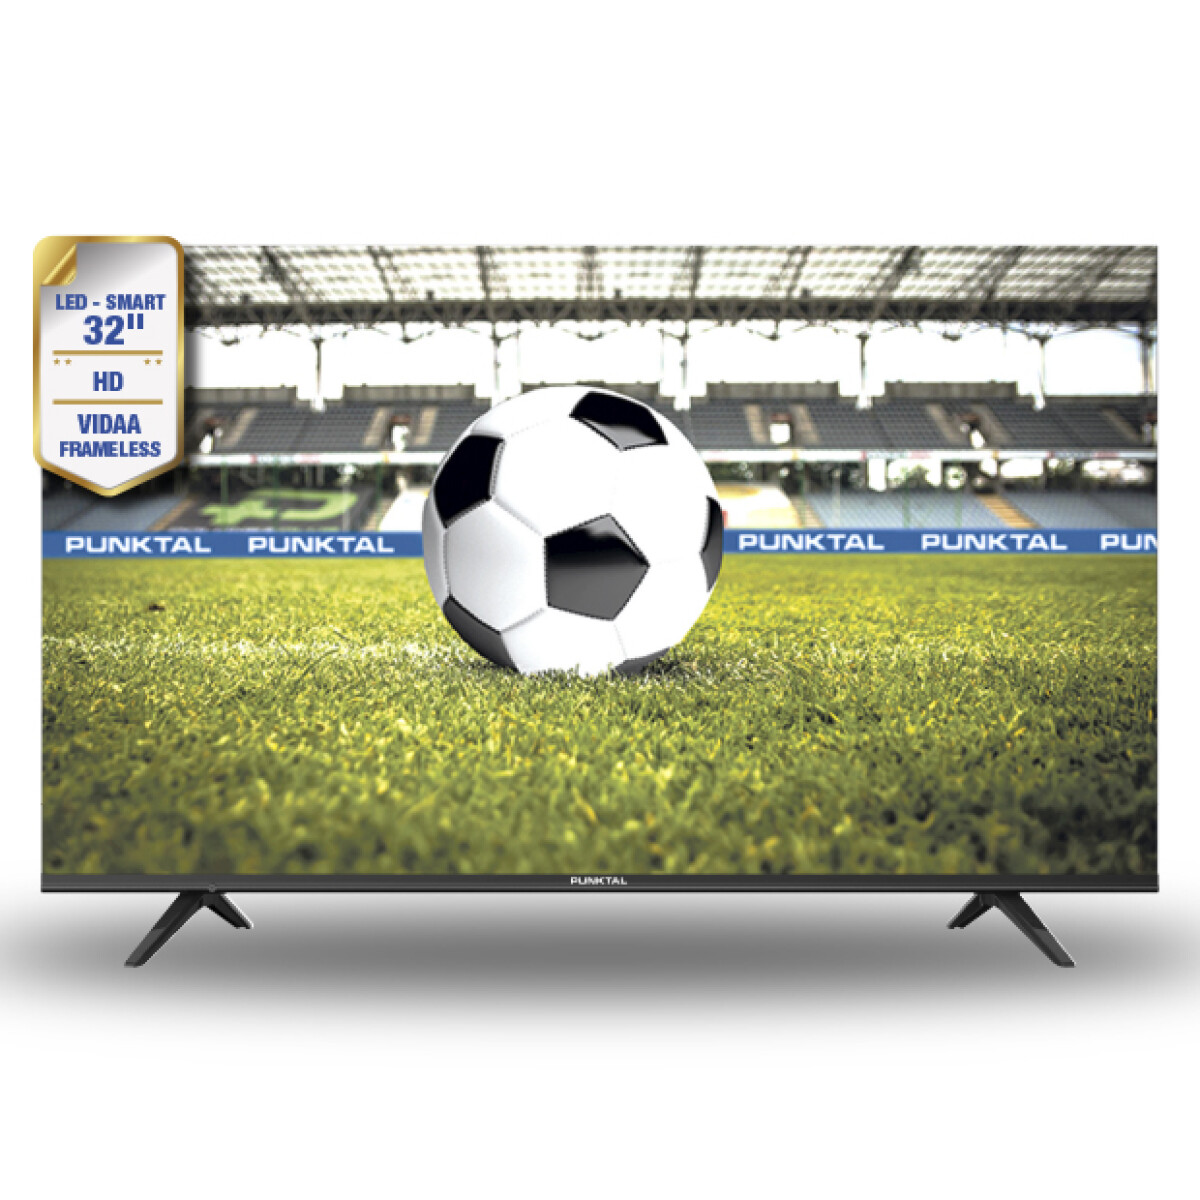 TV LED 32" HD Smart Frameless Punktal VIDAA 